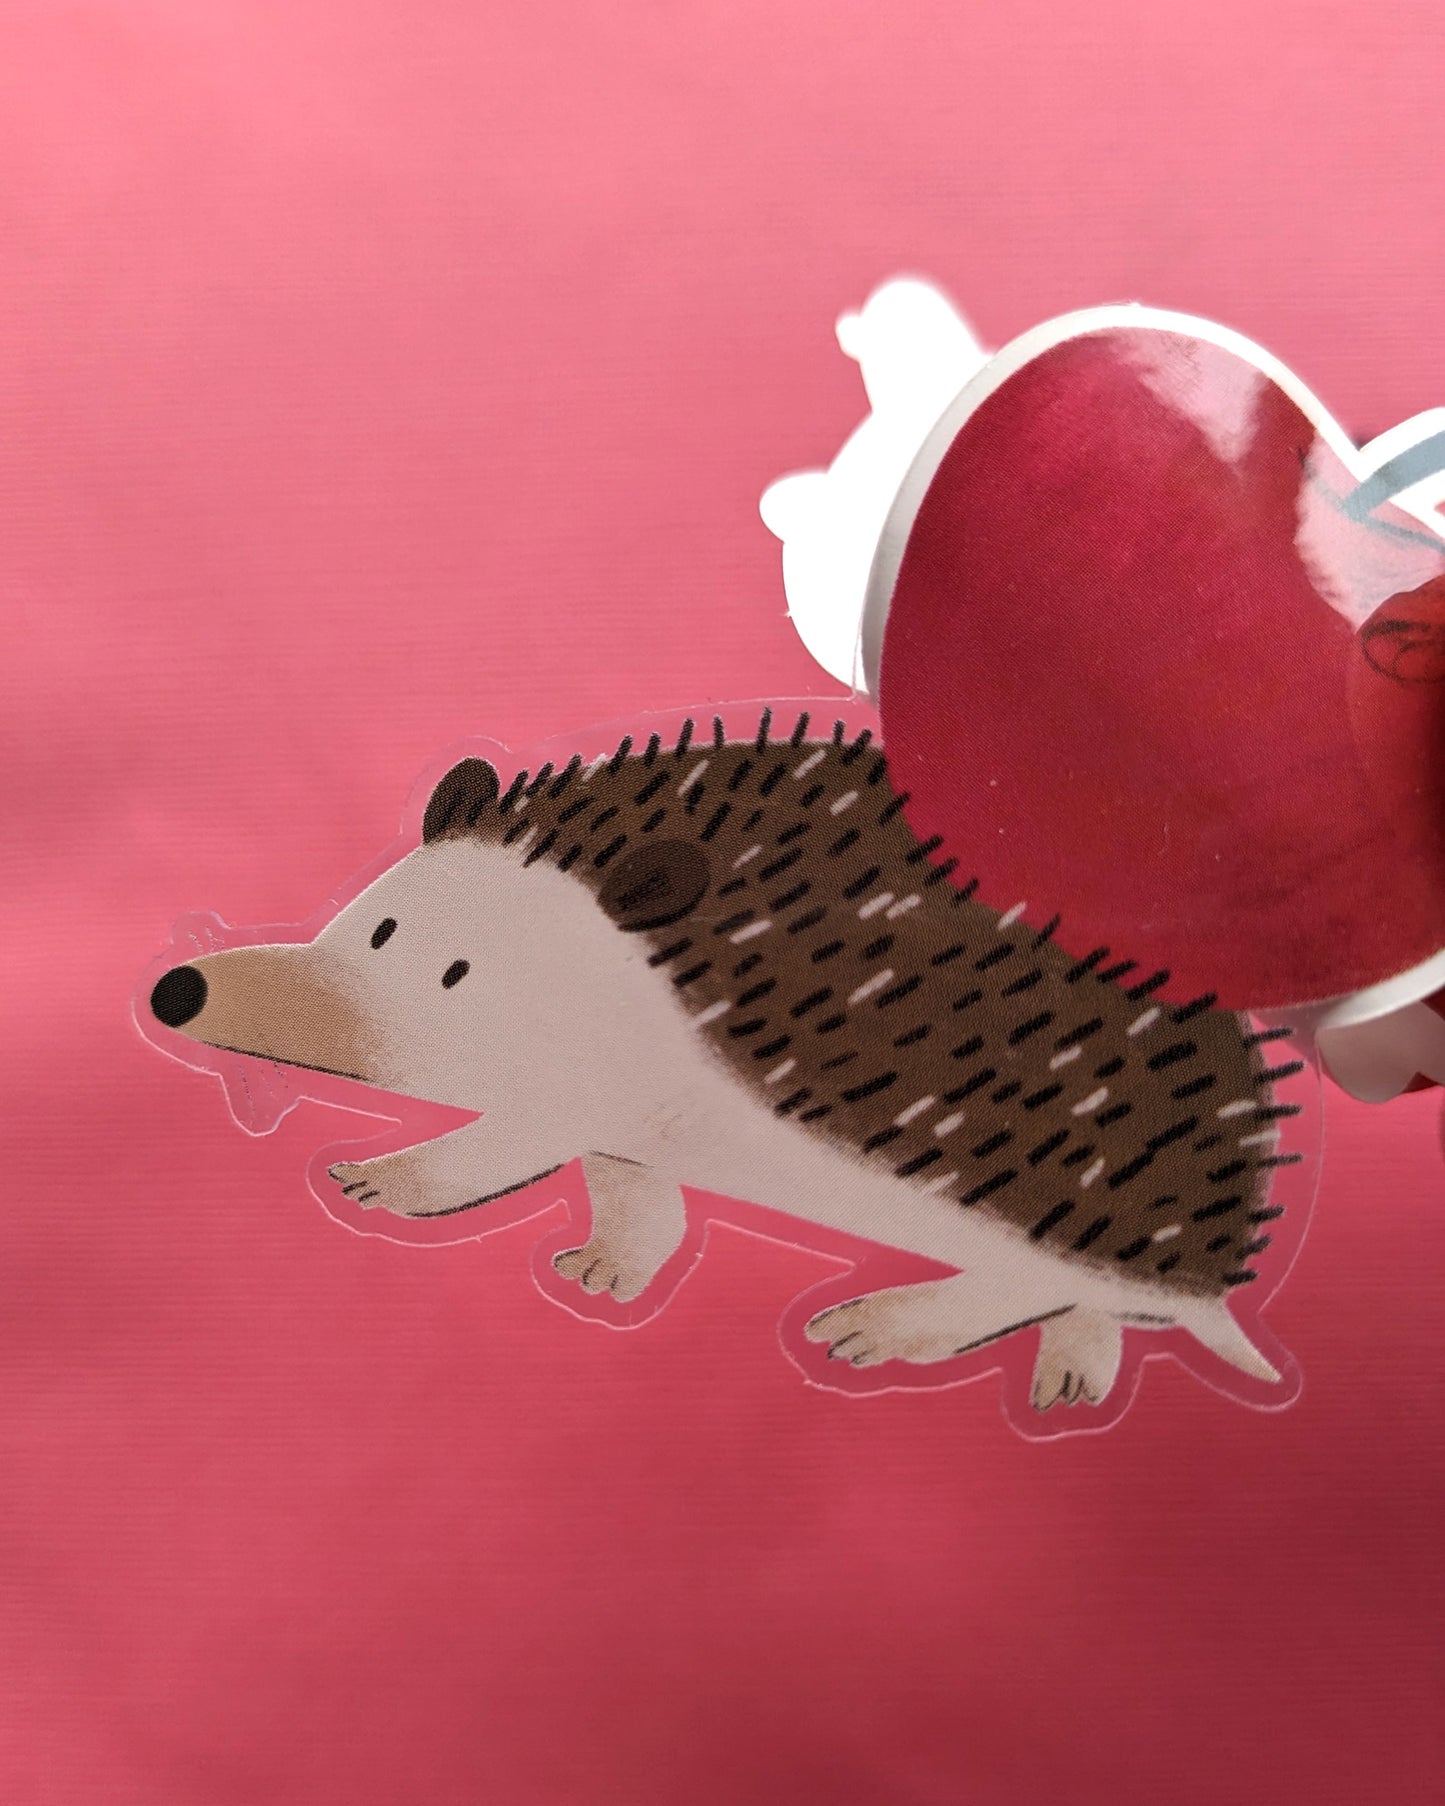 Hedgehog & Apple - Clear Vinyl Sticker